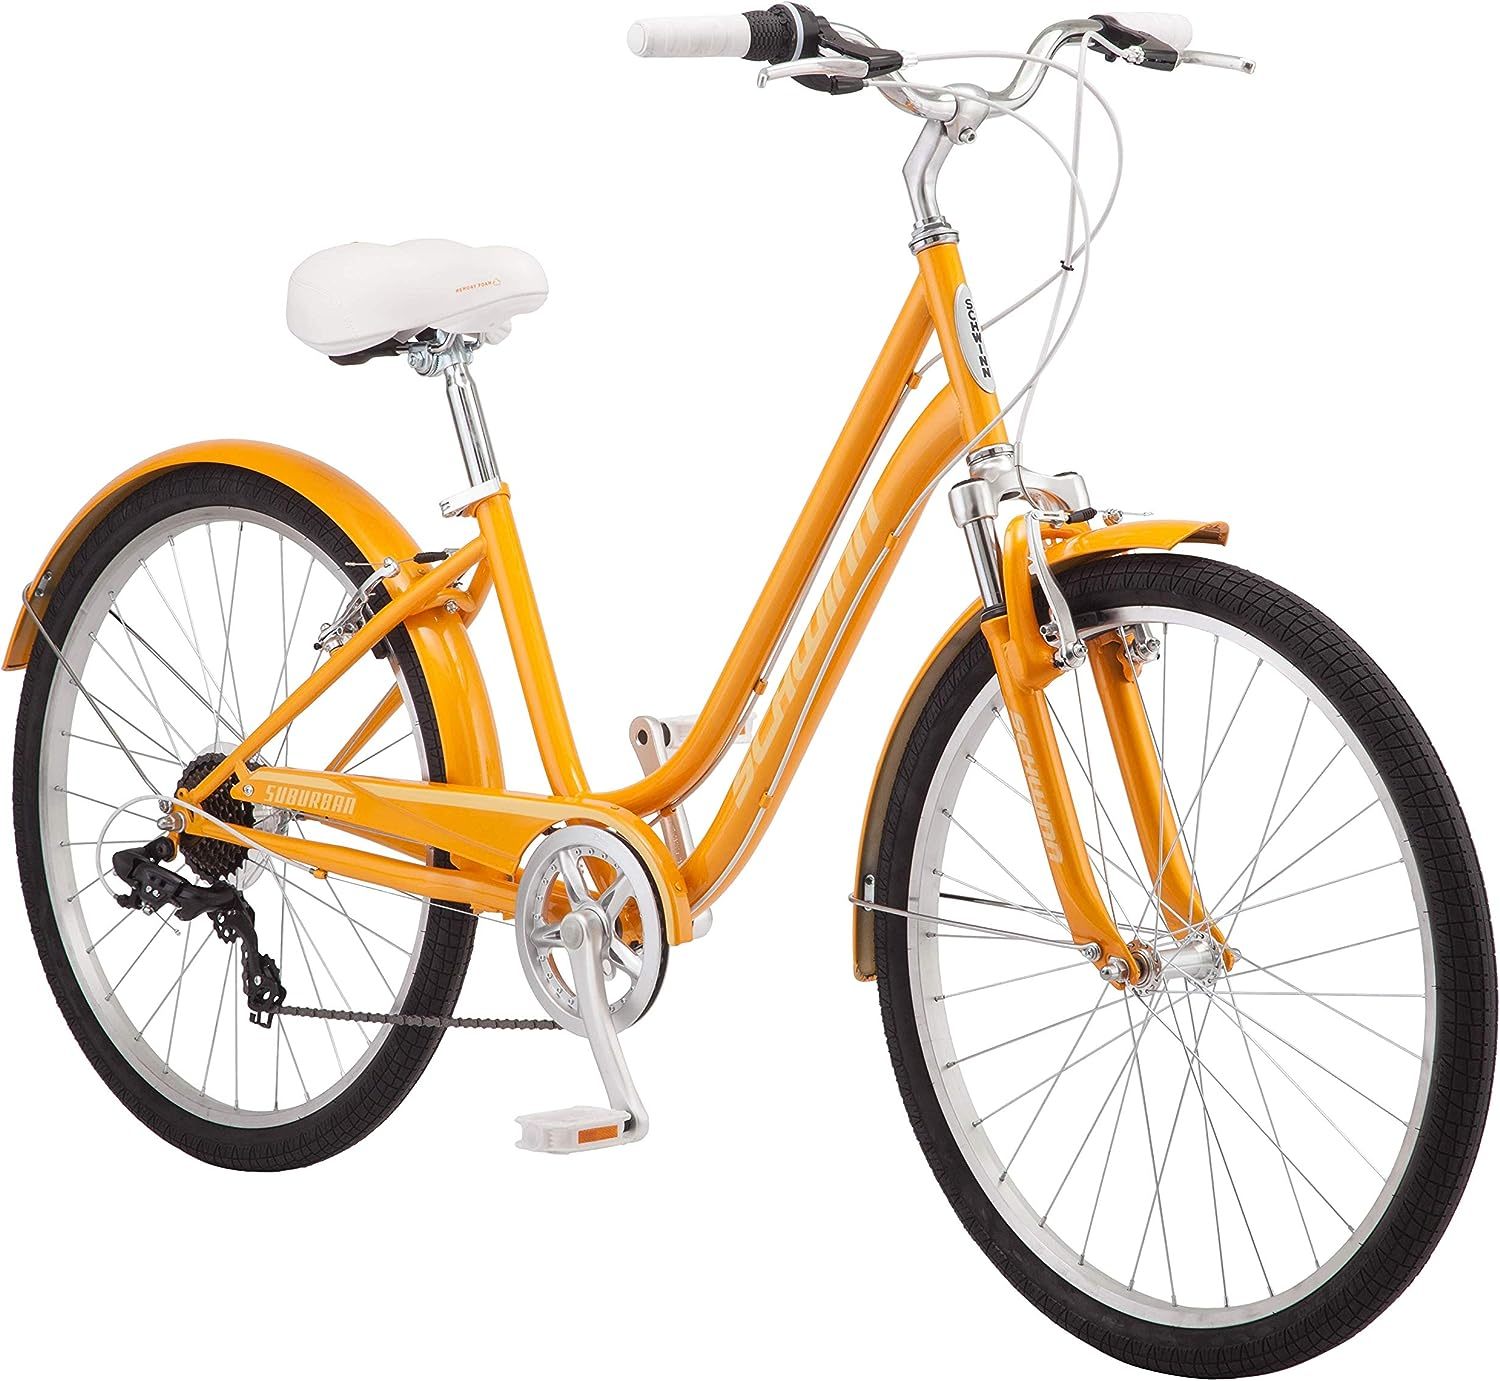 Suburban Comfort Bicycles By Schwinn. - $486.95